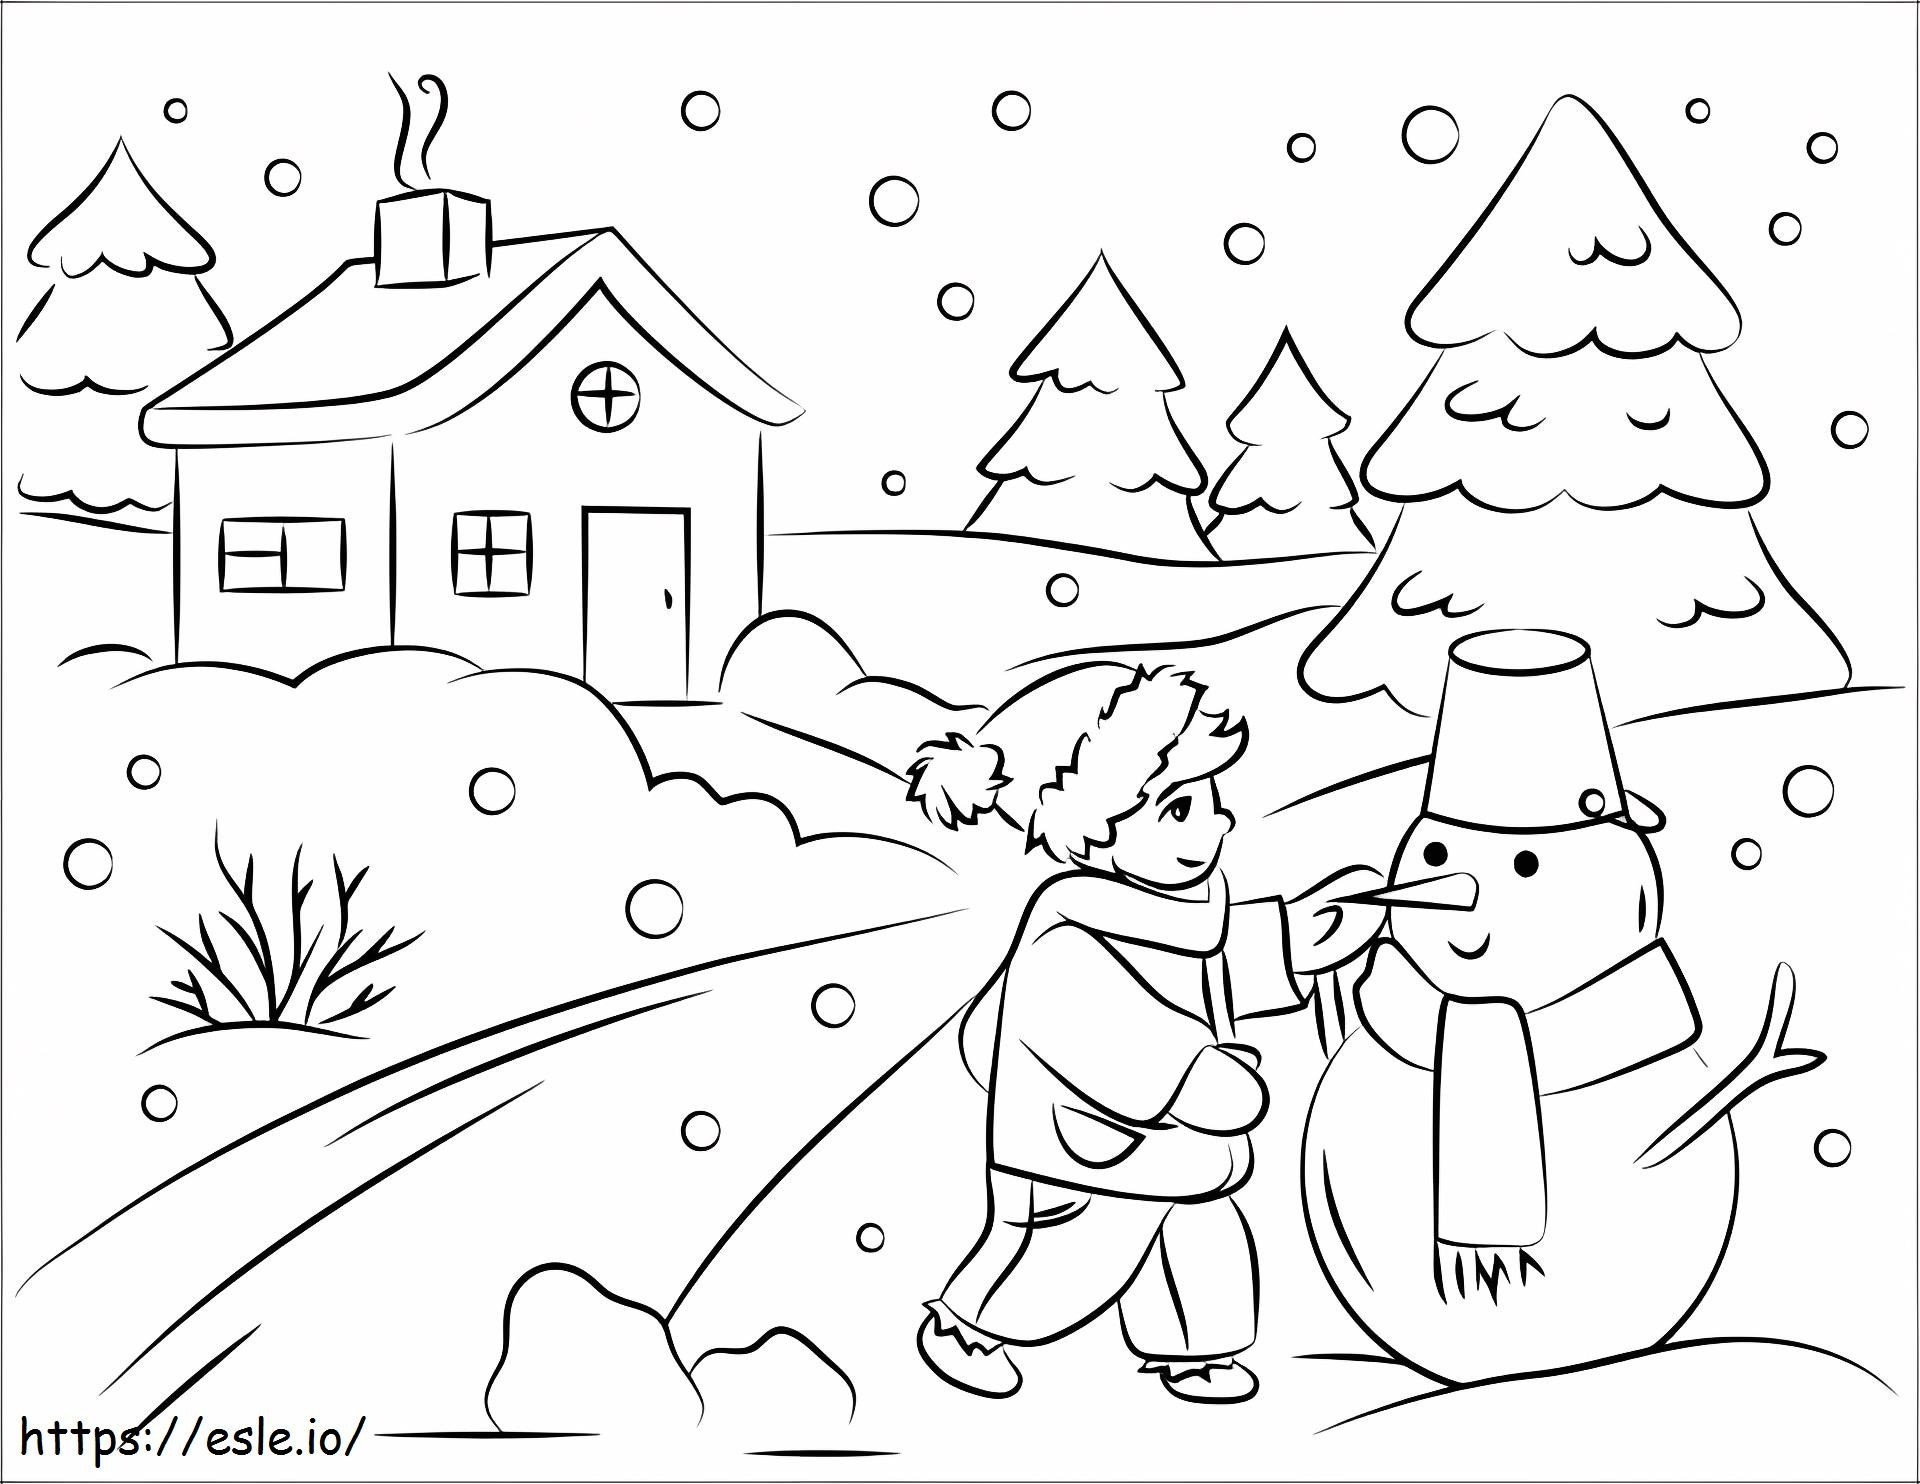 Boy Building Snowman 1 coloring page